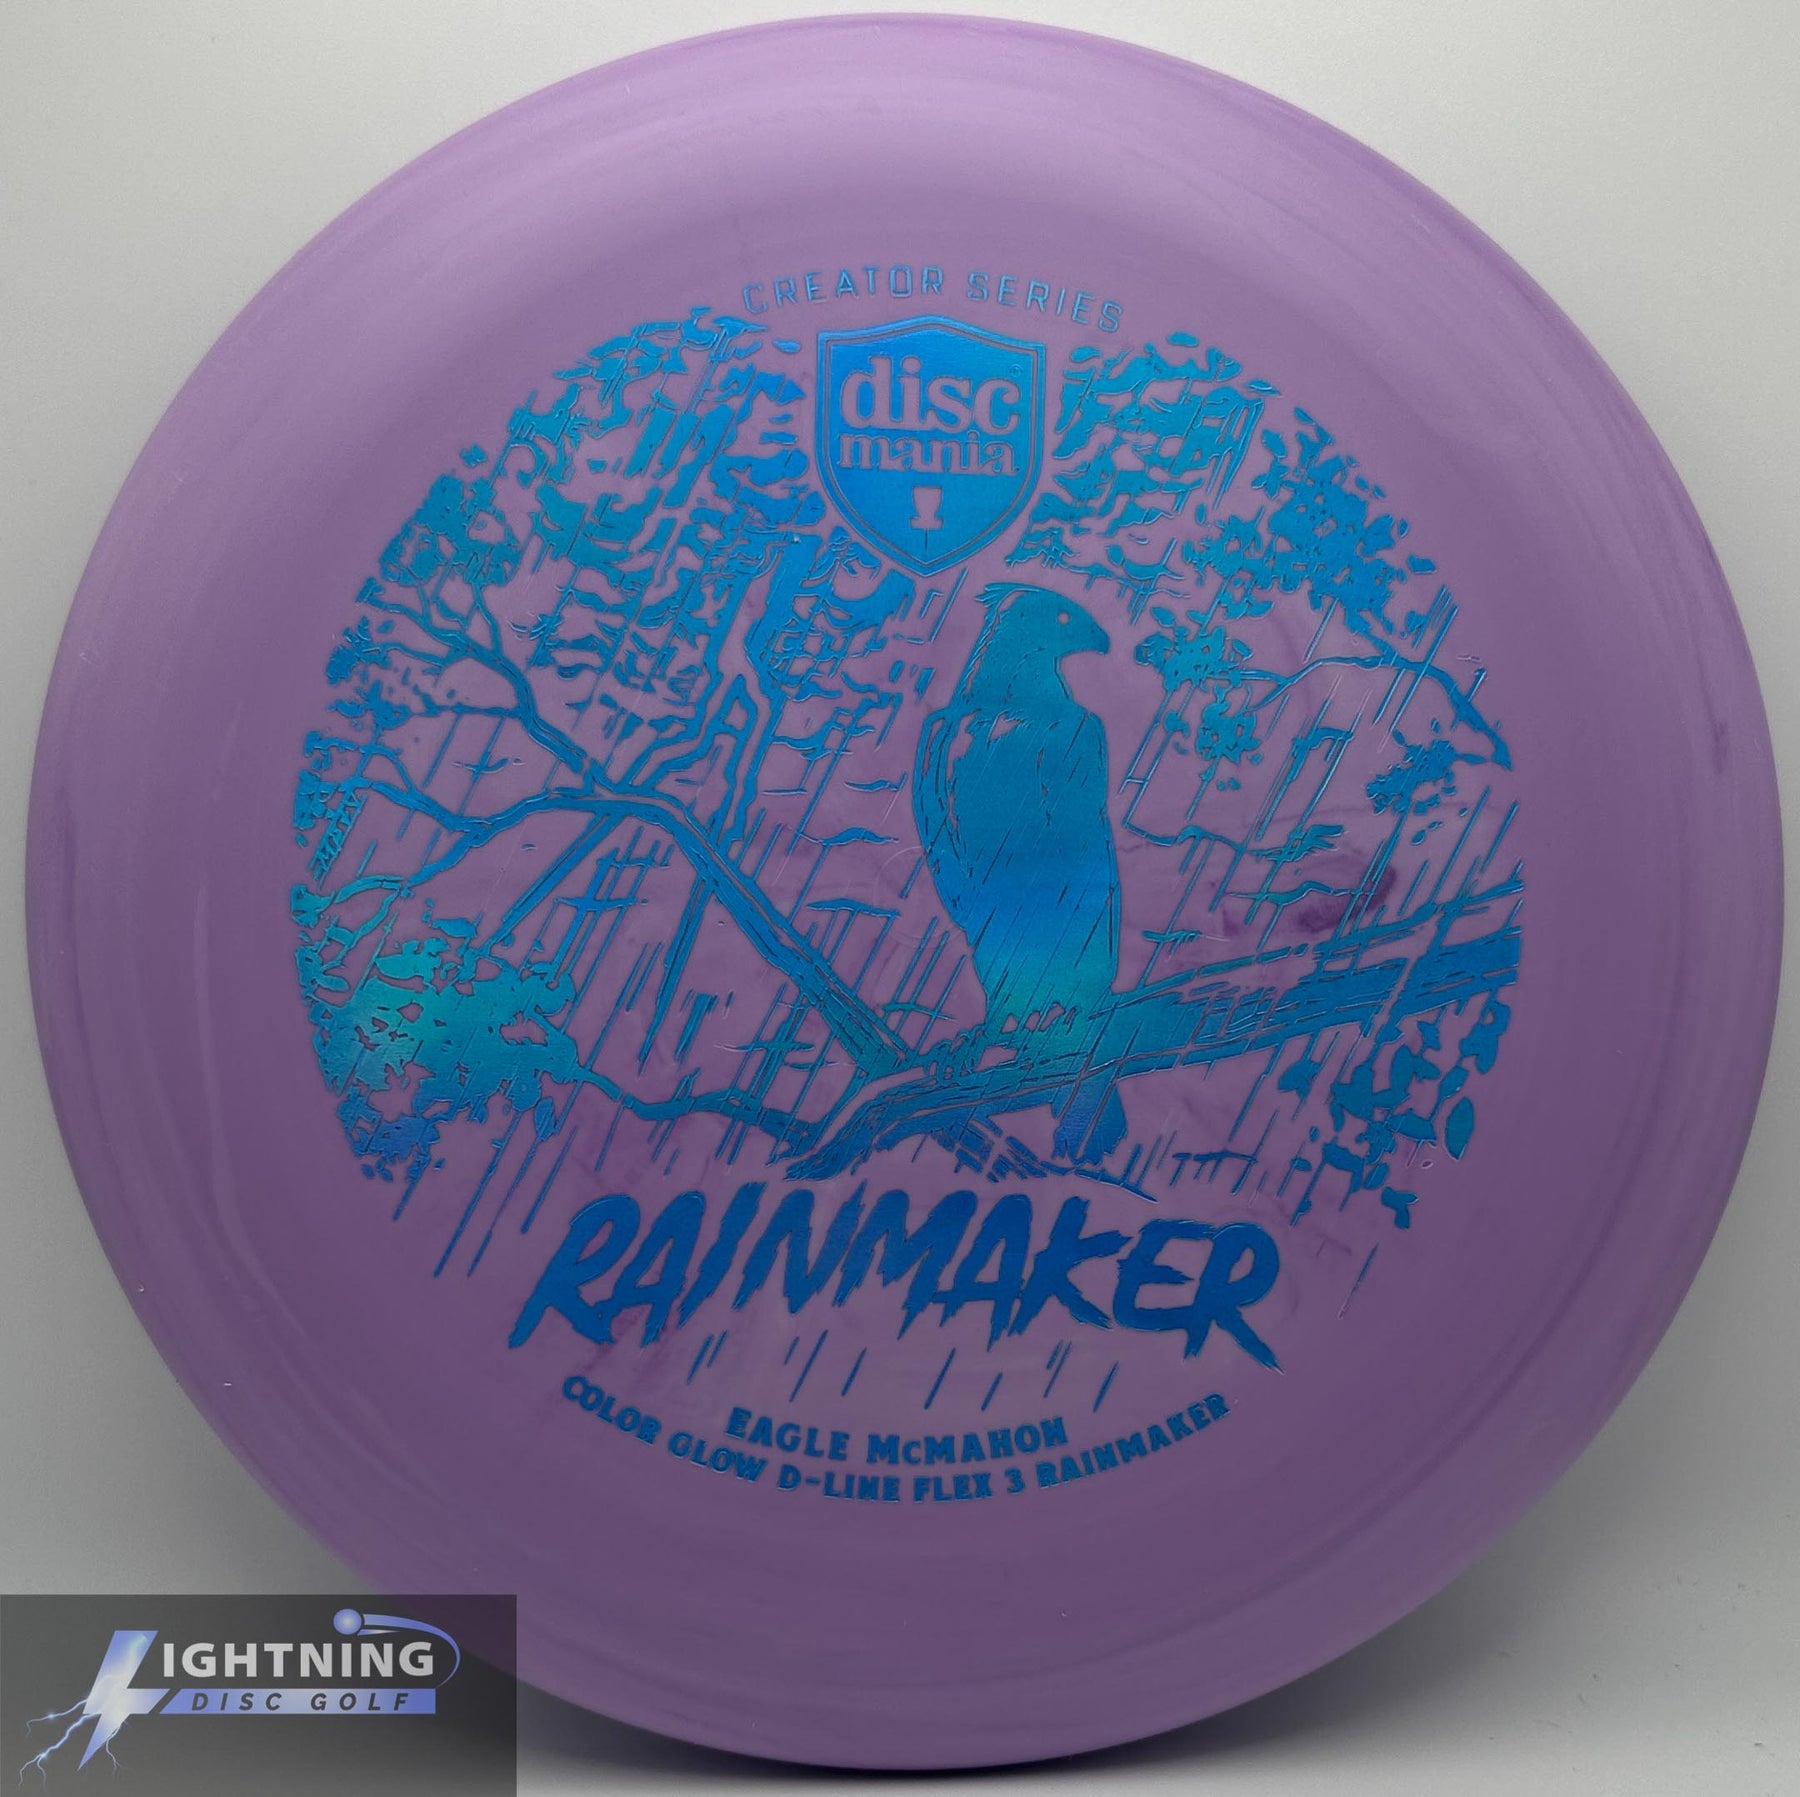 Discmania Rainmaker - Eagle McMahon Creator Series Color Glow D-Line Flex 3 P2